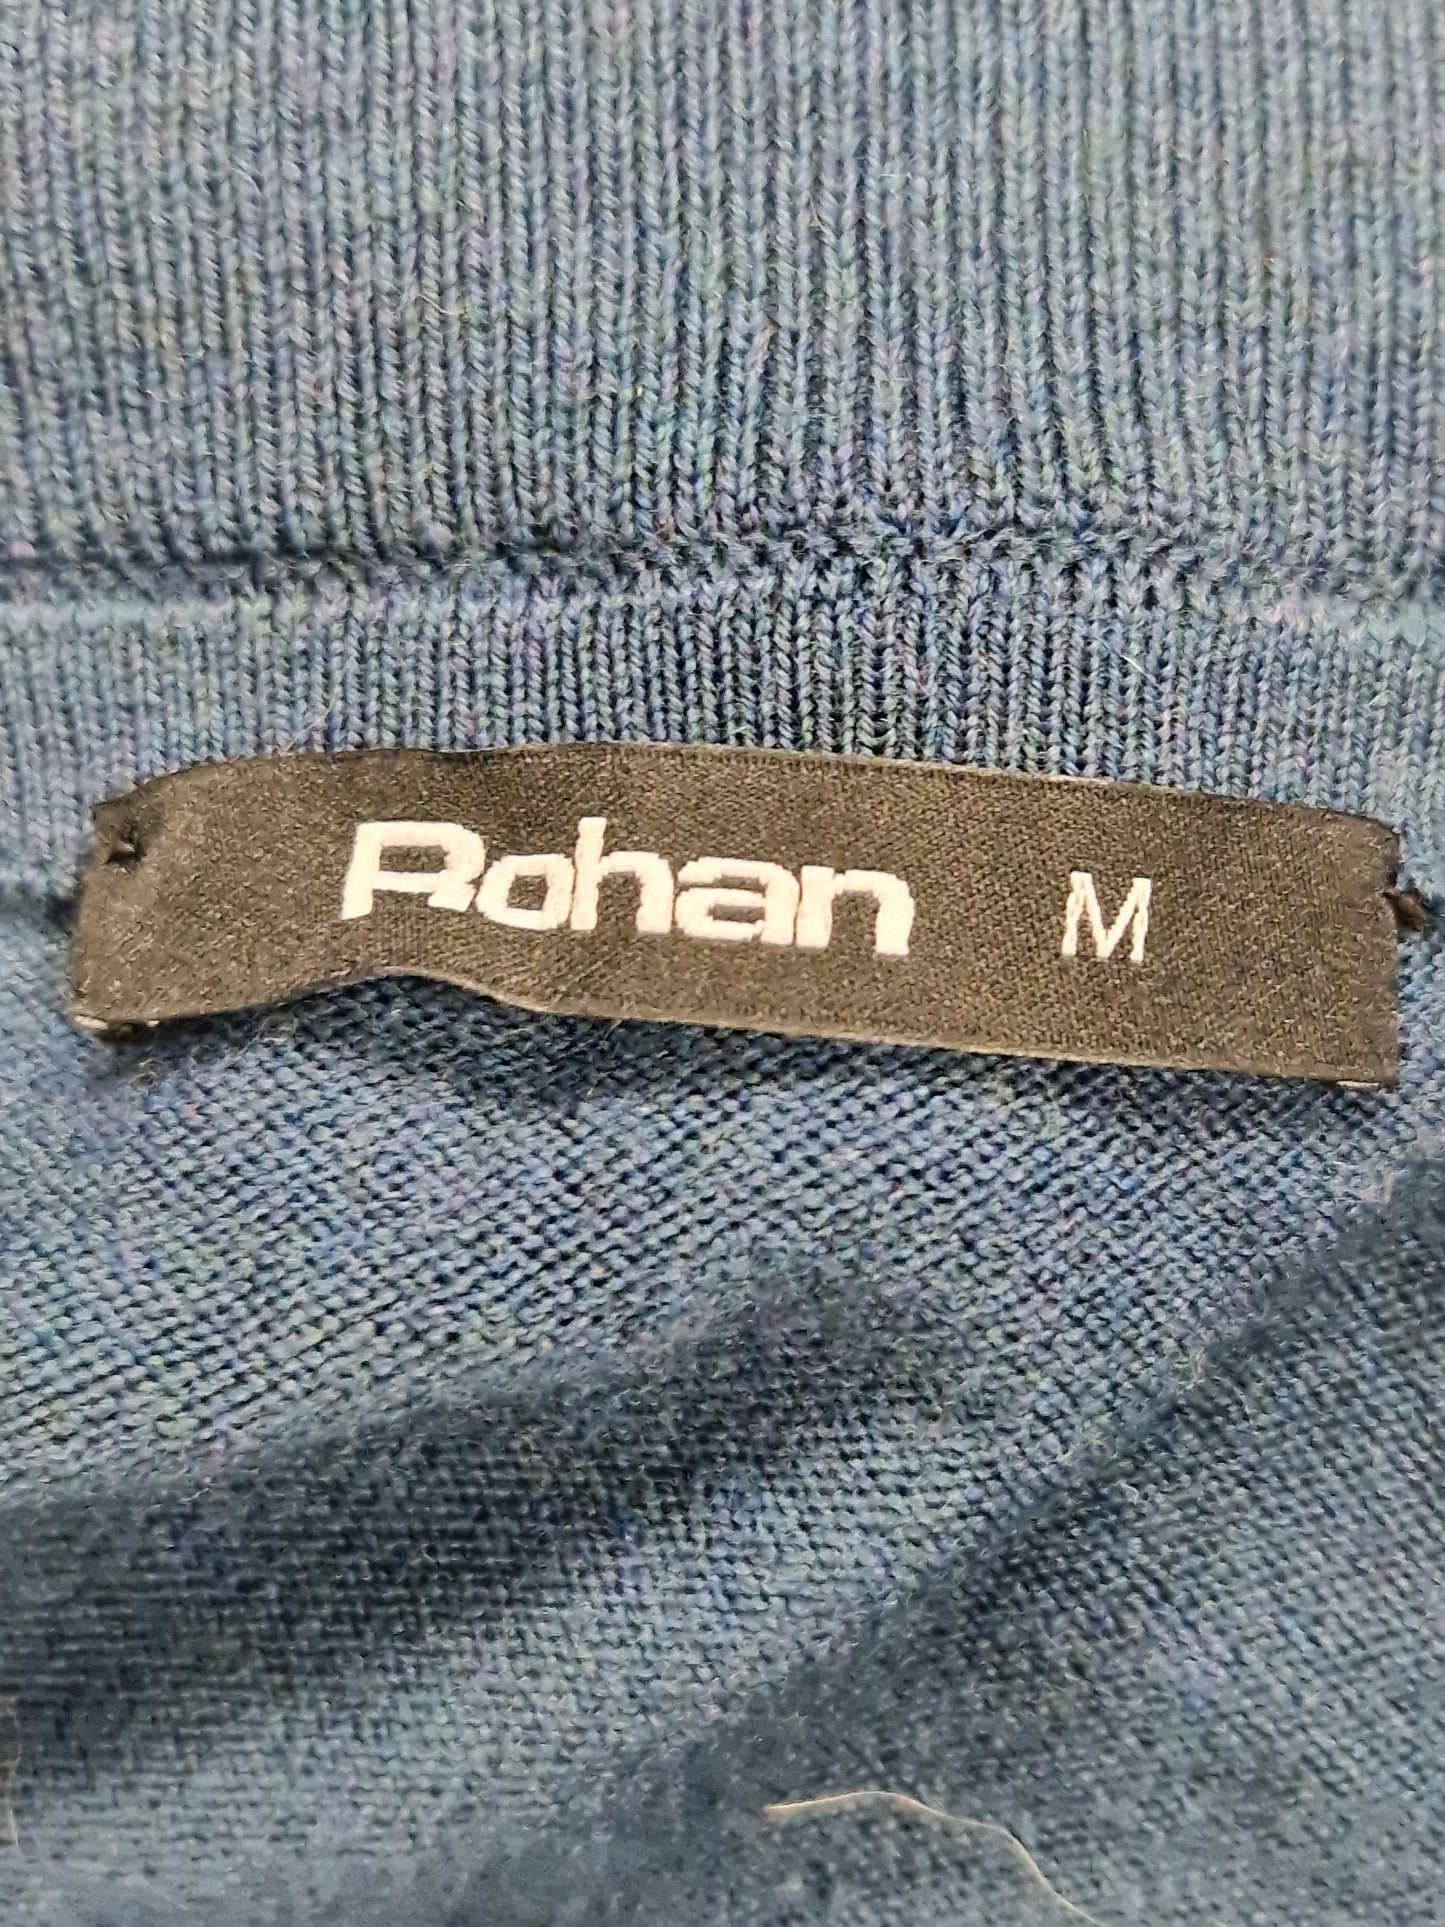 Rohan Mens Long Sleeve top in Teal - Size Medium